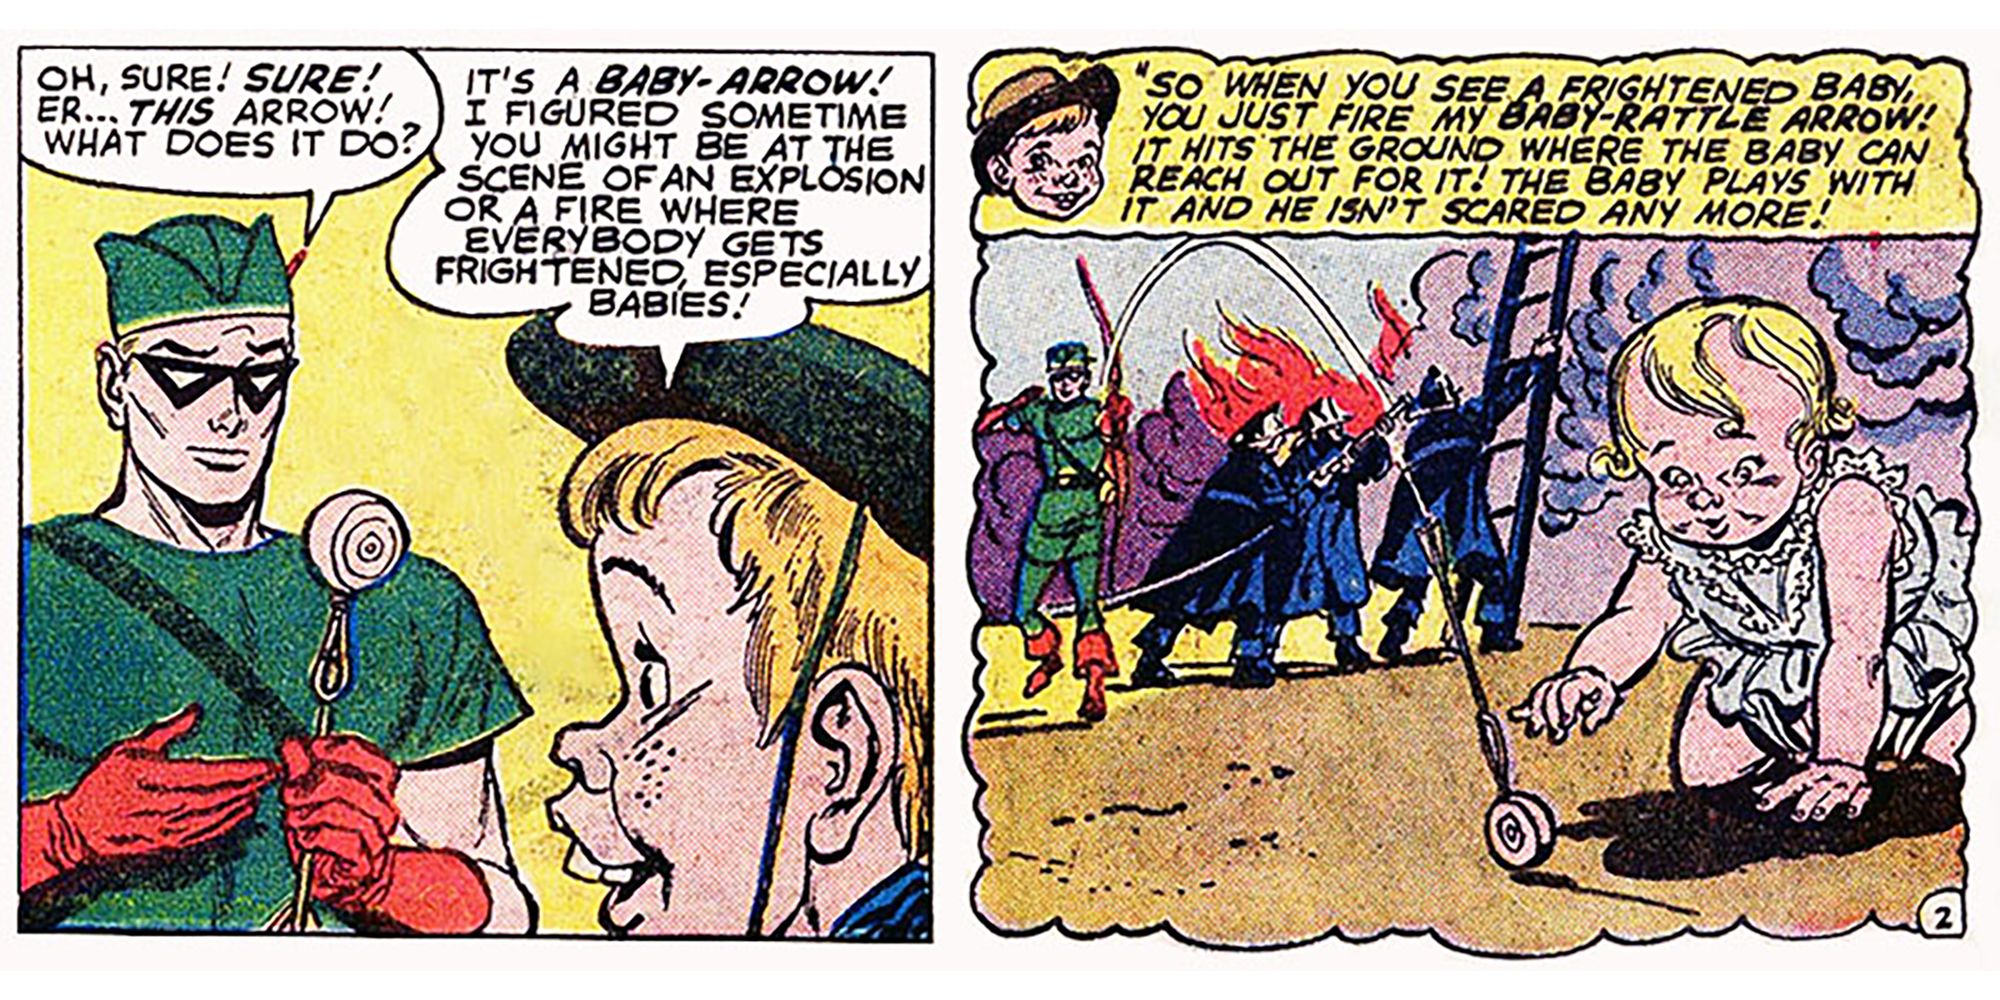 The Green Arrow In DC Comics